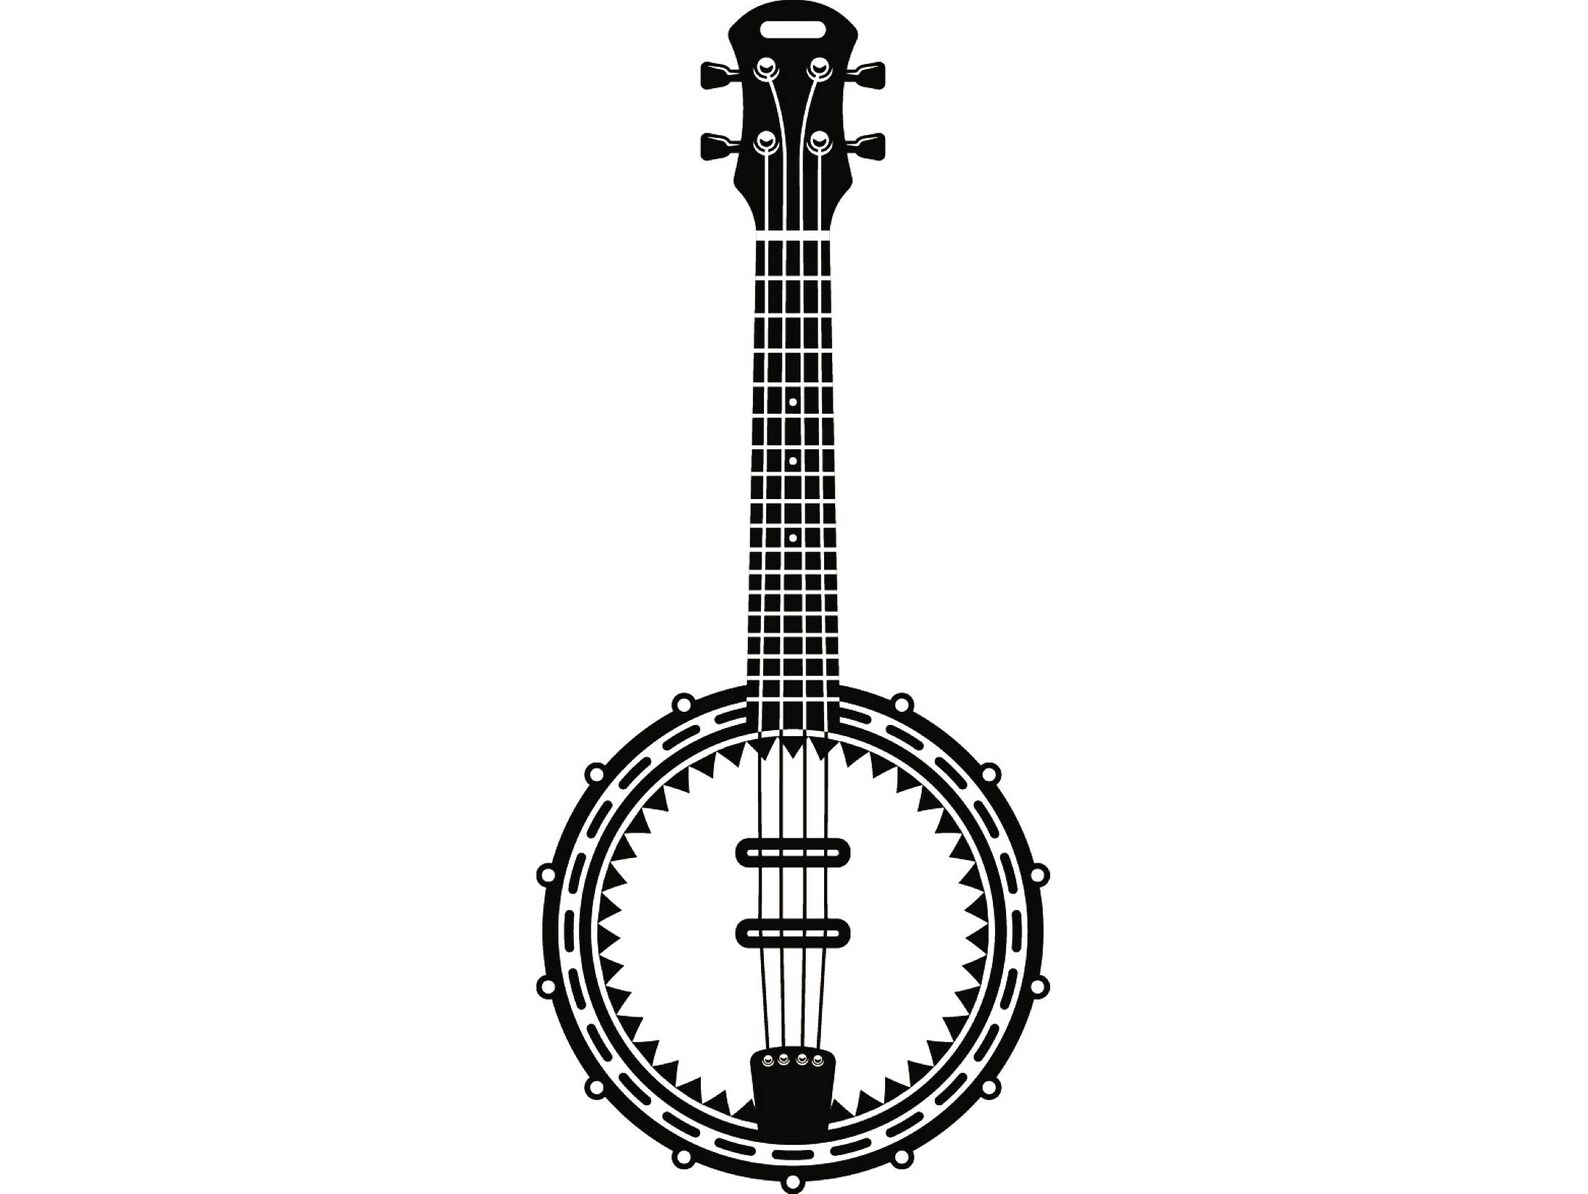 Banjo 1 Musical Instrument Strings Rock Music Guitar Country